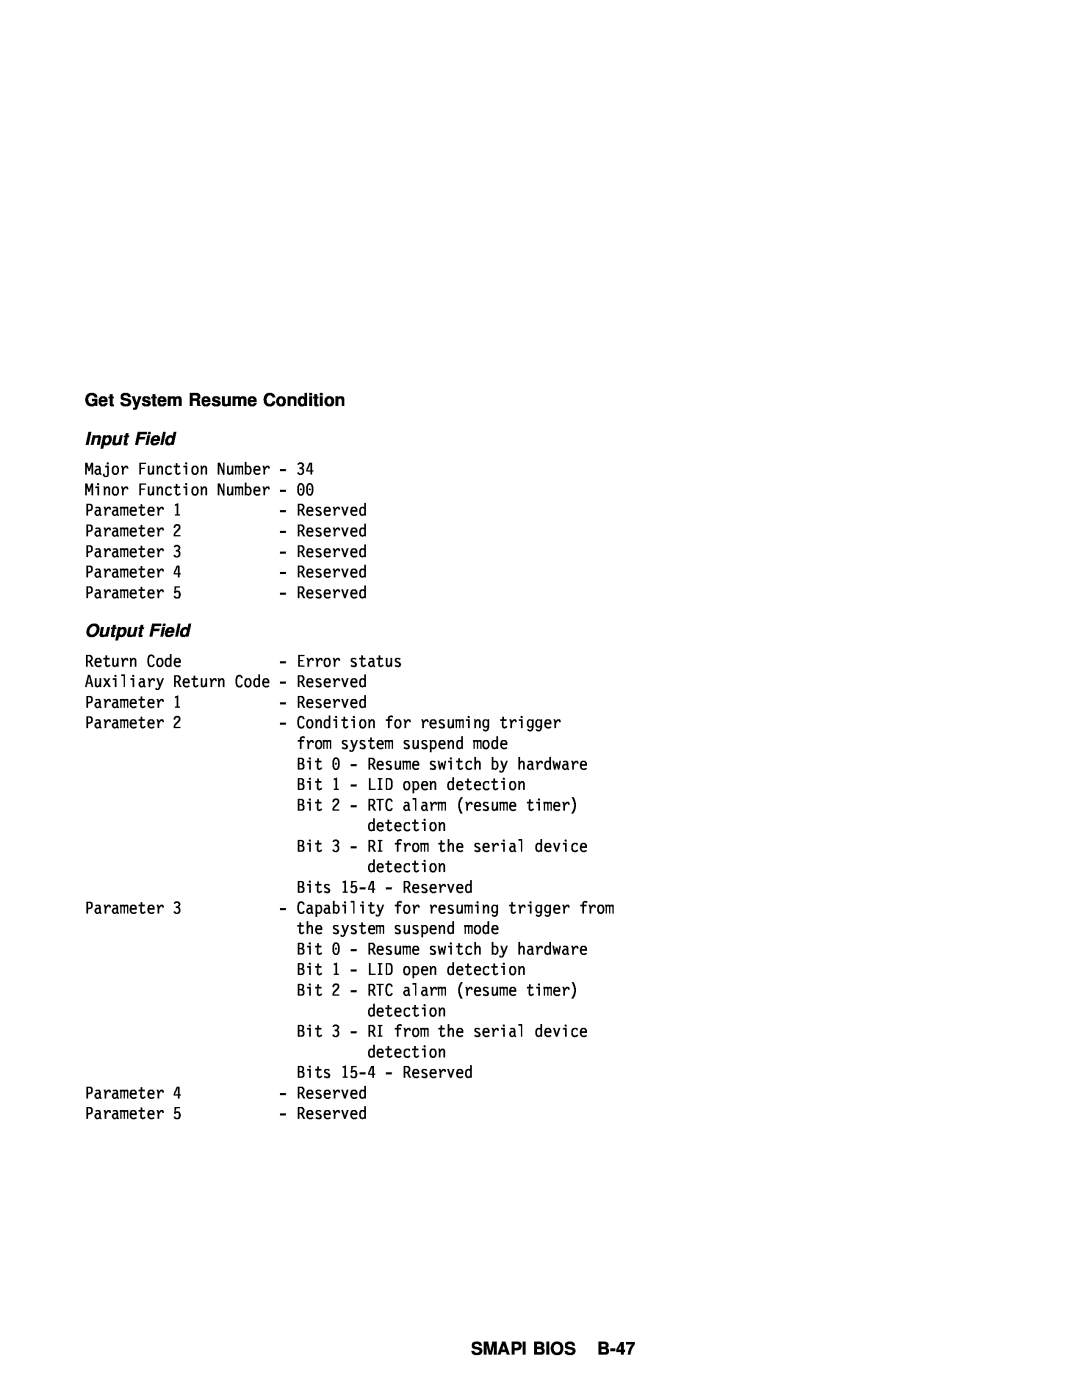 IBM 770 manual SMAPI BIOS B-47, Get System Resume 